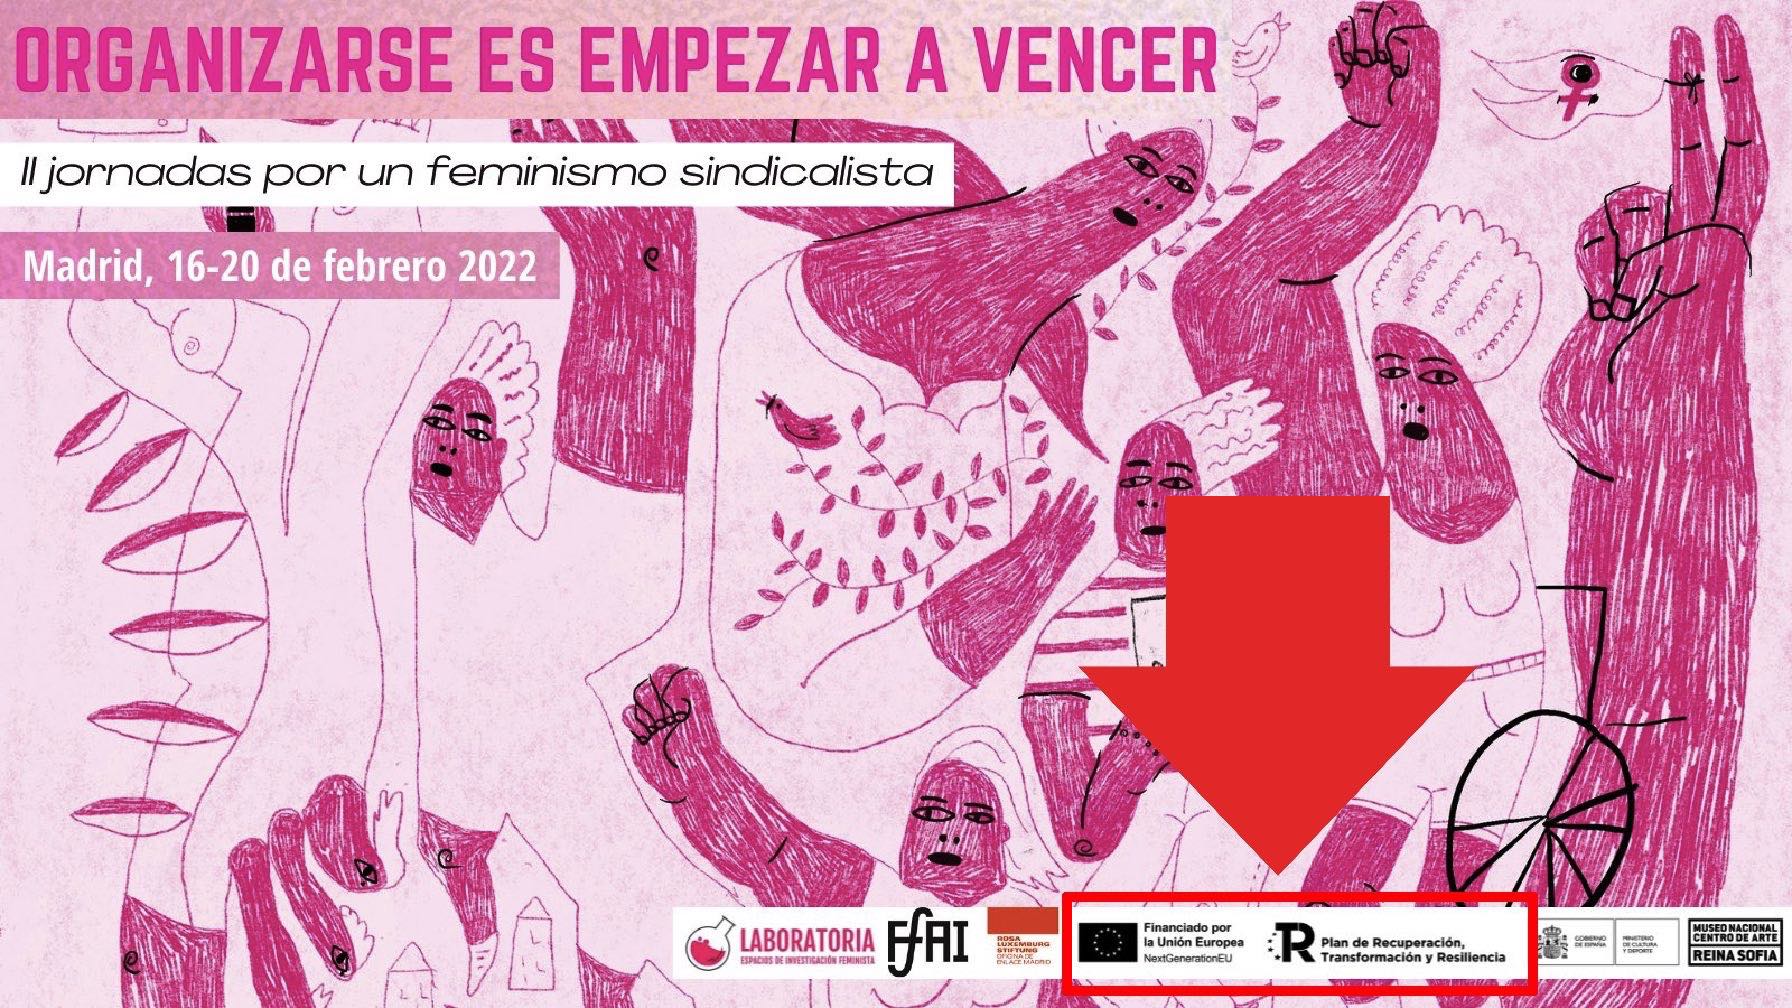 Cartel del evento sobre feminismo sindicalista.